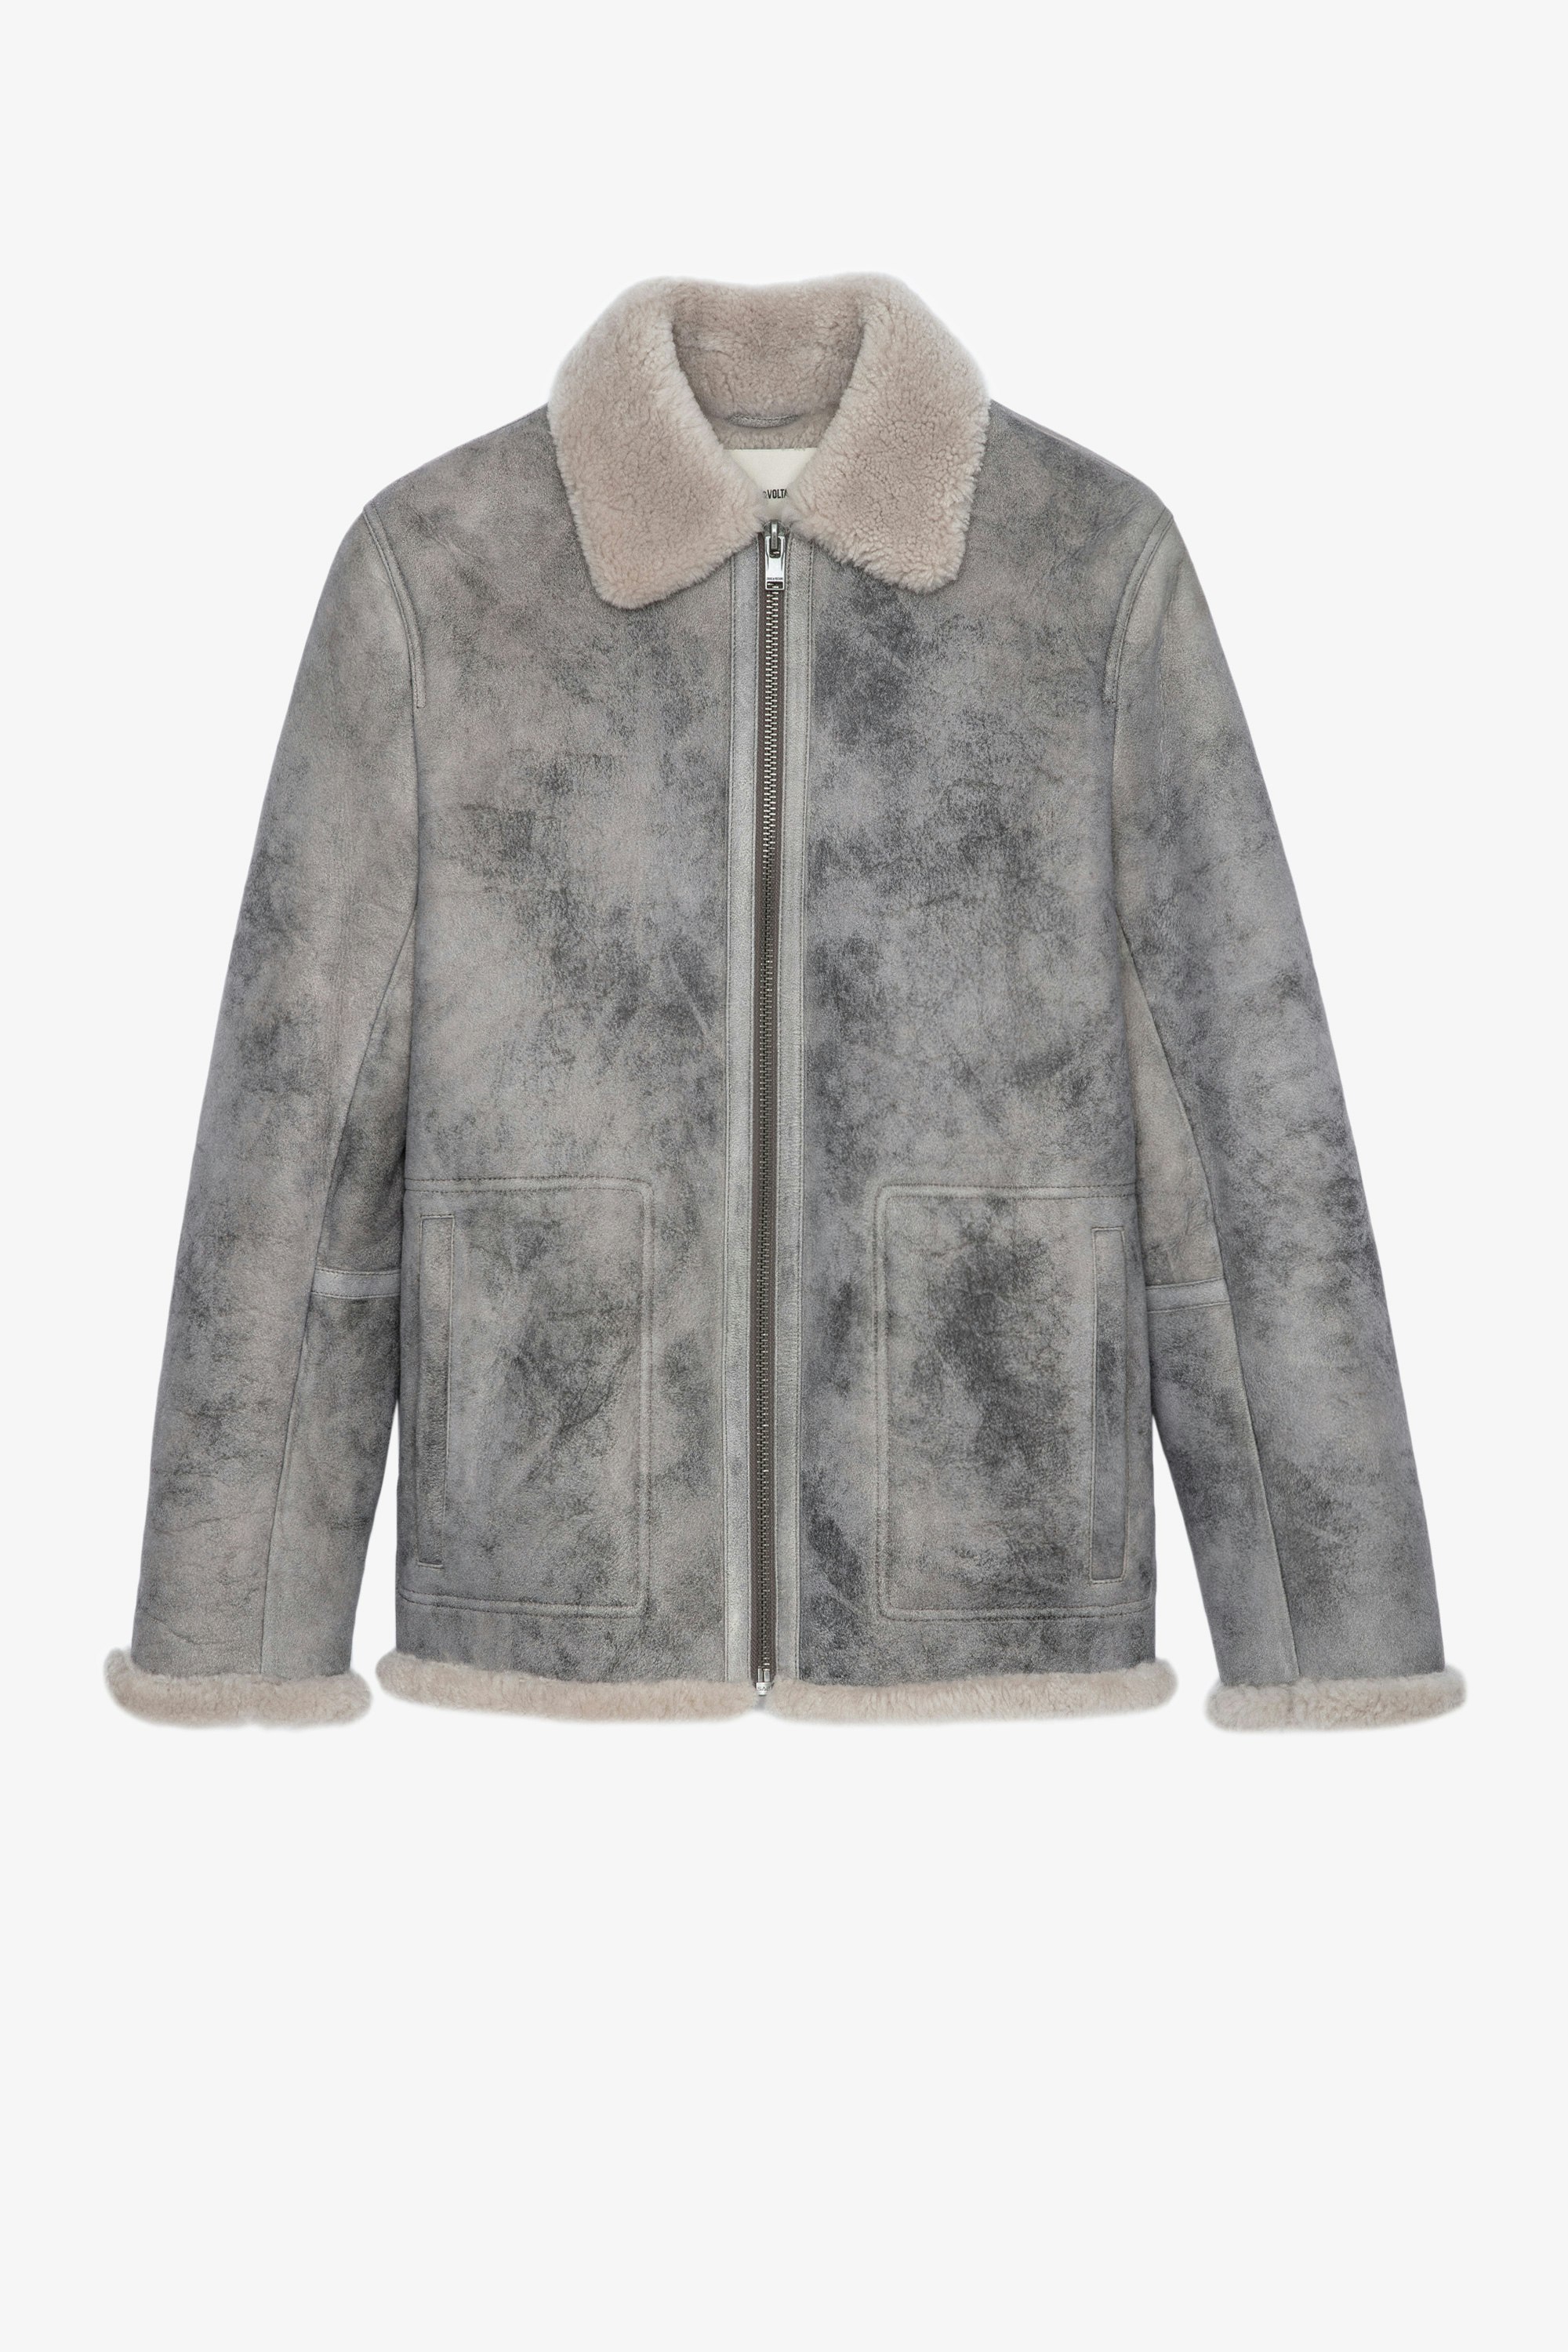 Lean Shearling Jacket Men’s distressed shearling jacket